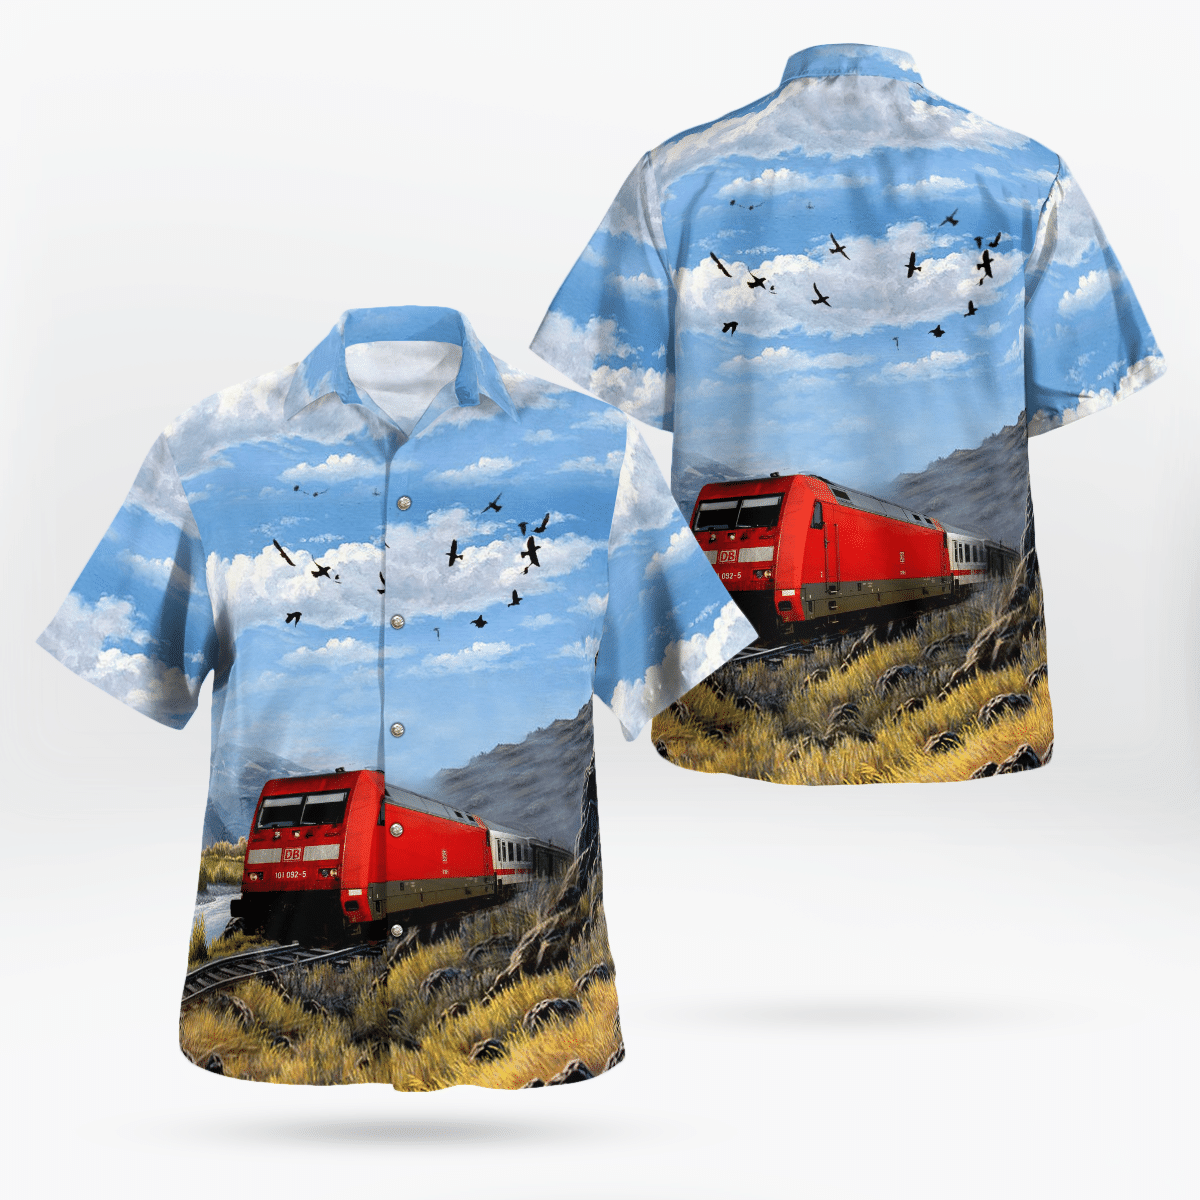 Get a new Hawaiian shirt to enjoy summer vacation 205